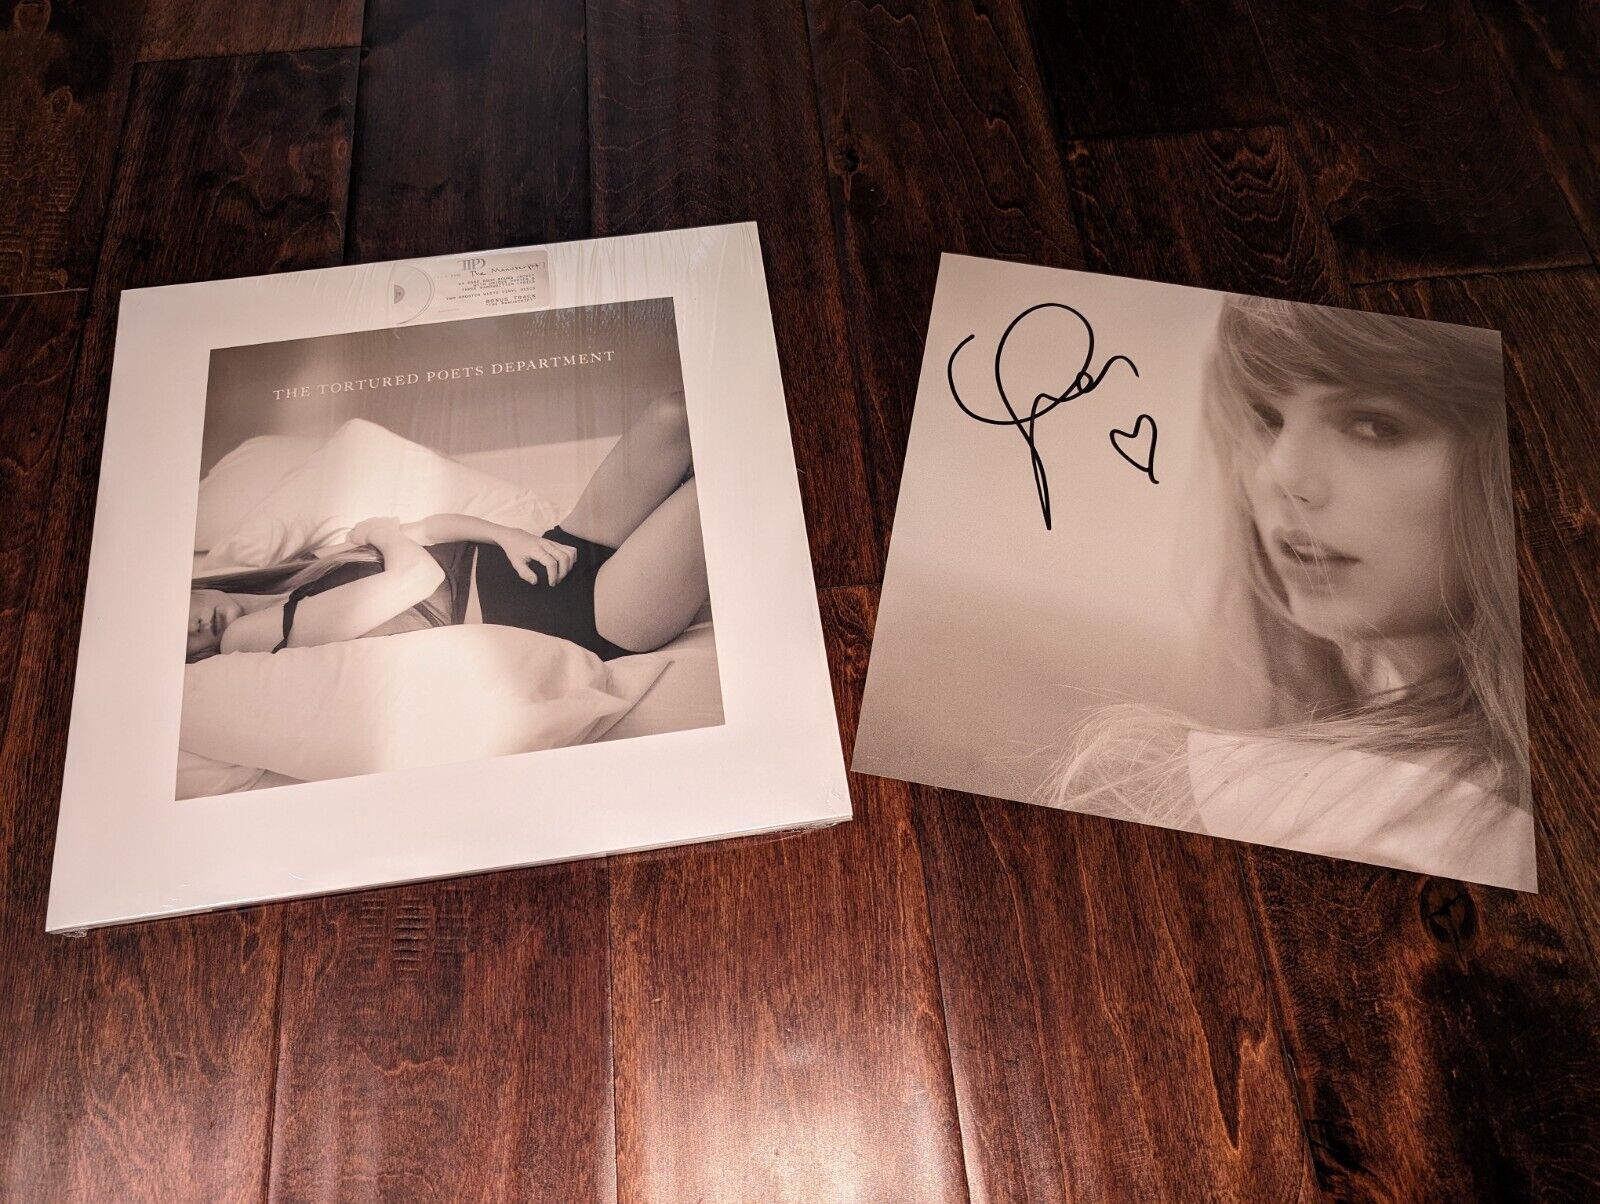 Taylor Swift SIGNED The Tortured Poets Department Vinyl Manuscript w/ FULL Heart